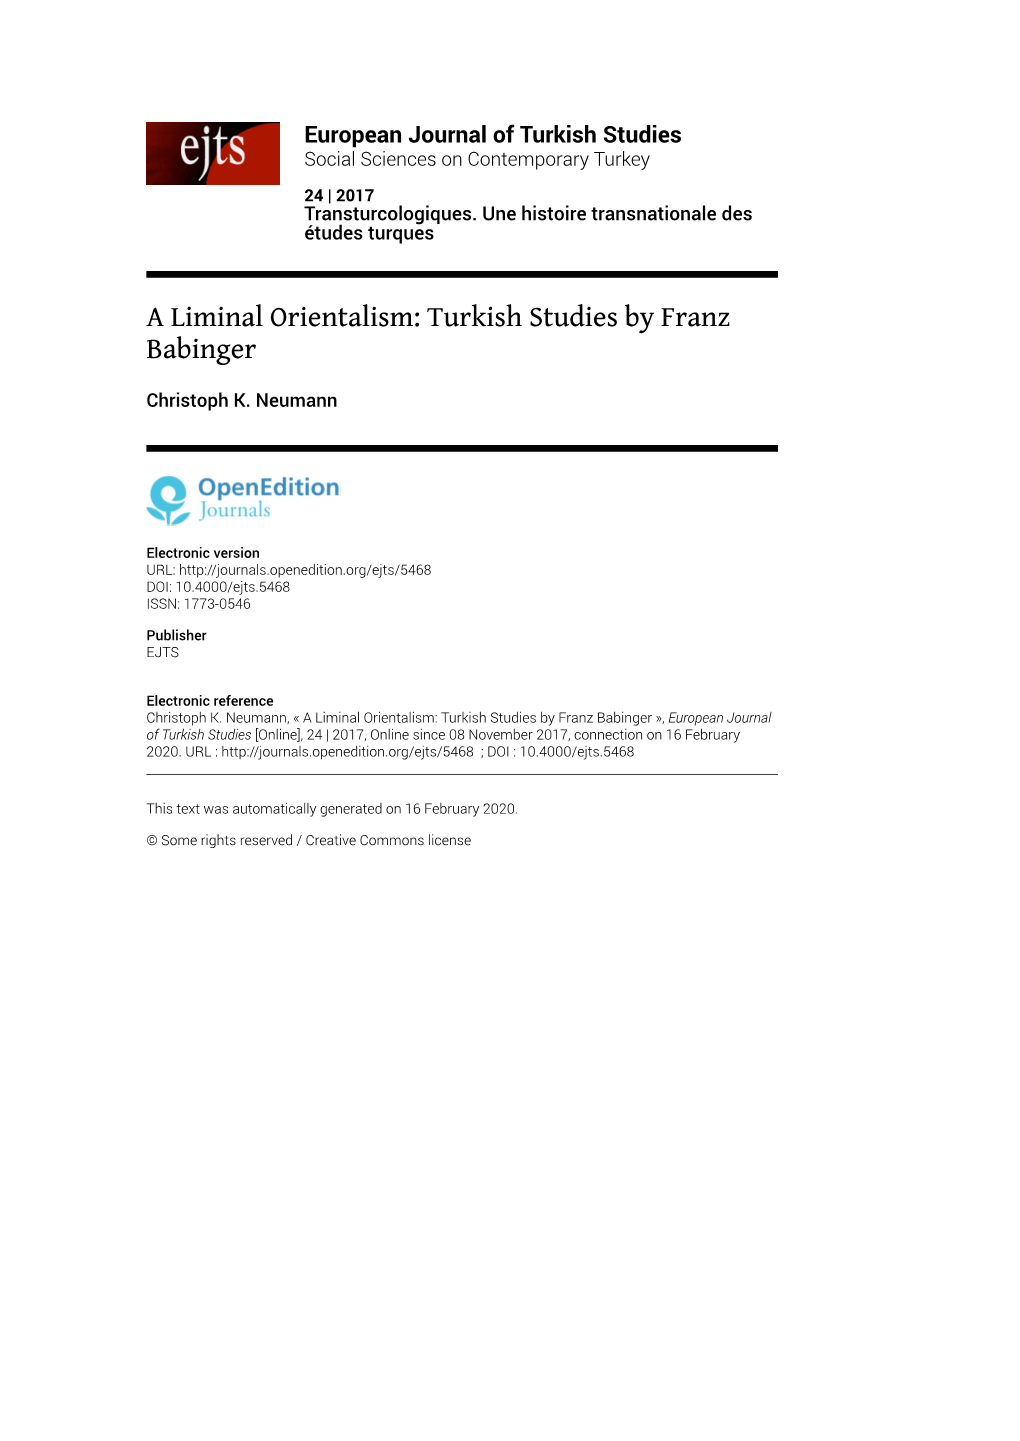 European Journal of Turkish Studies, 24 | 2017 a Liminal Orientalism: Turkish Studies by Franz Babinger 2